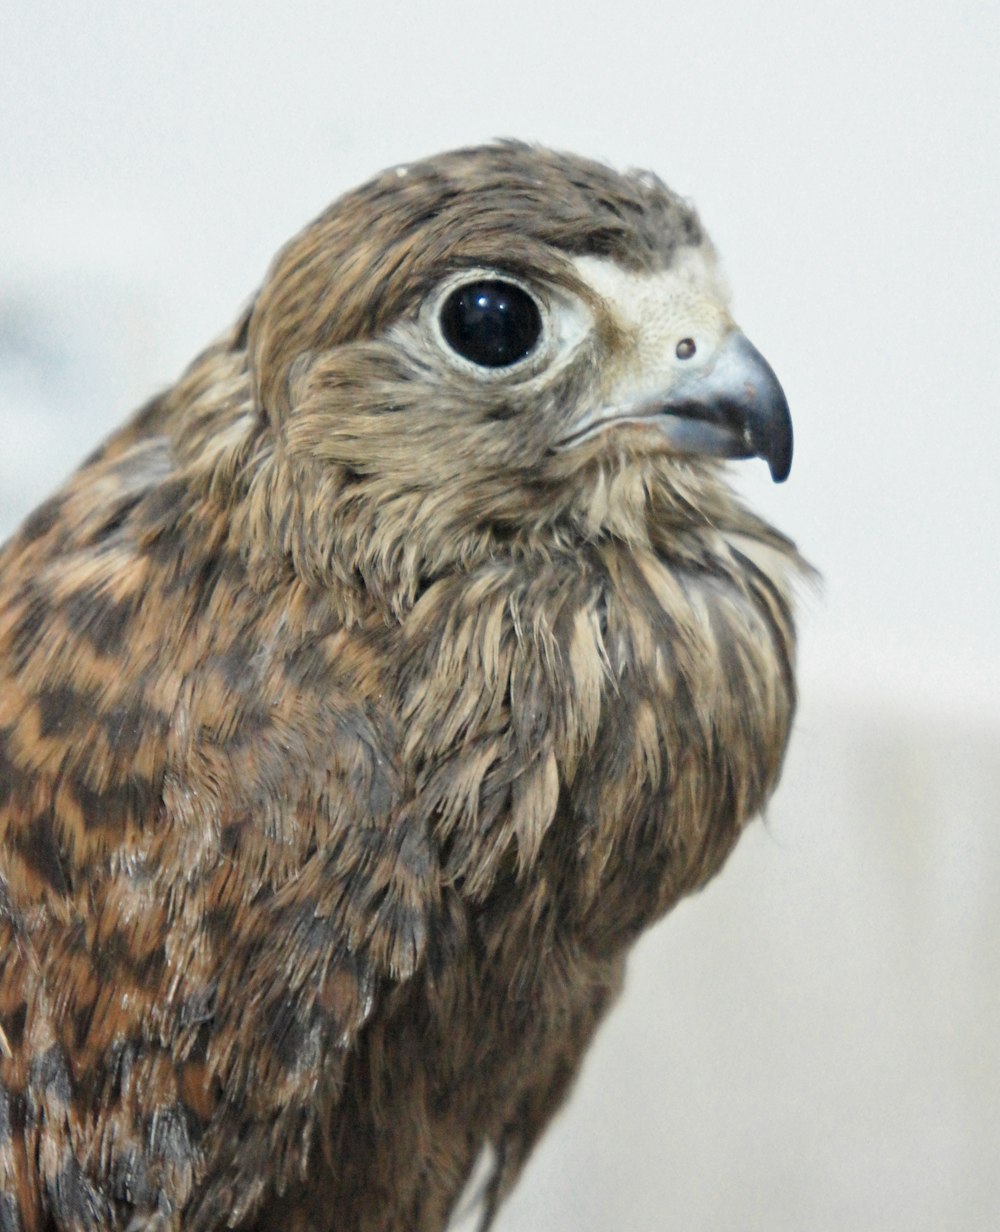 a close up of a bird of prey